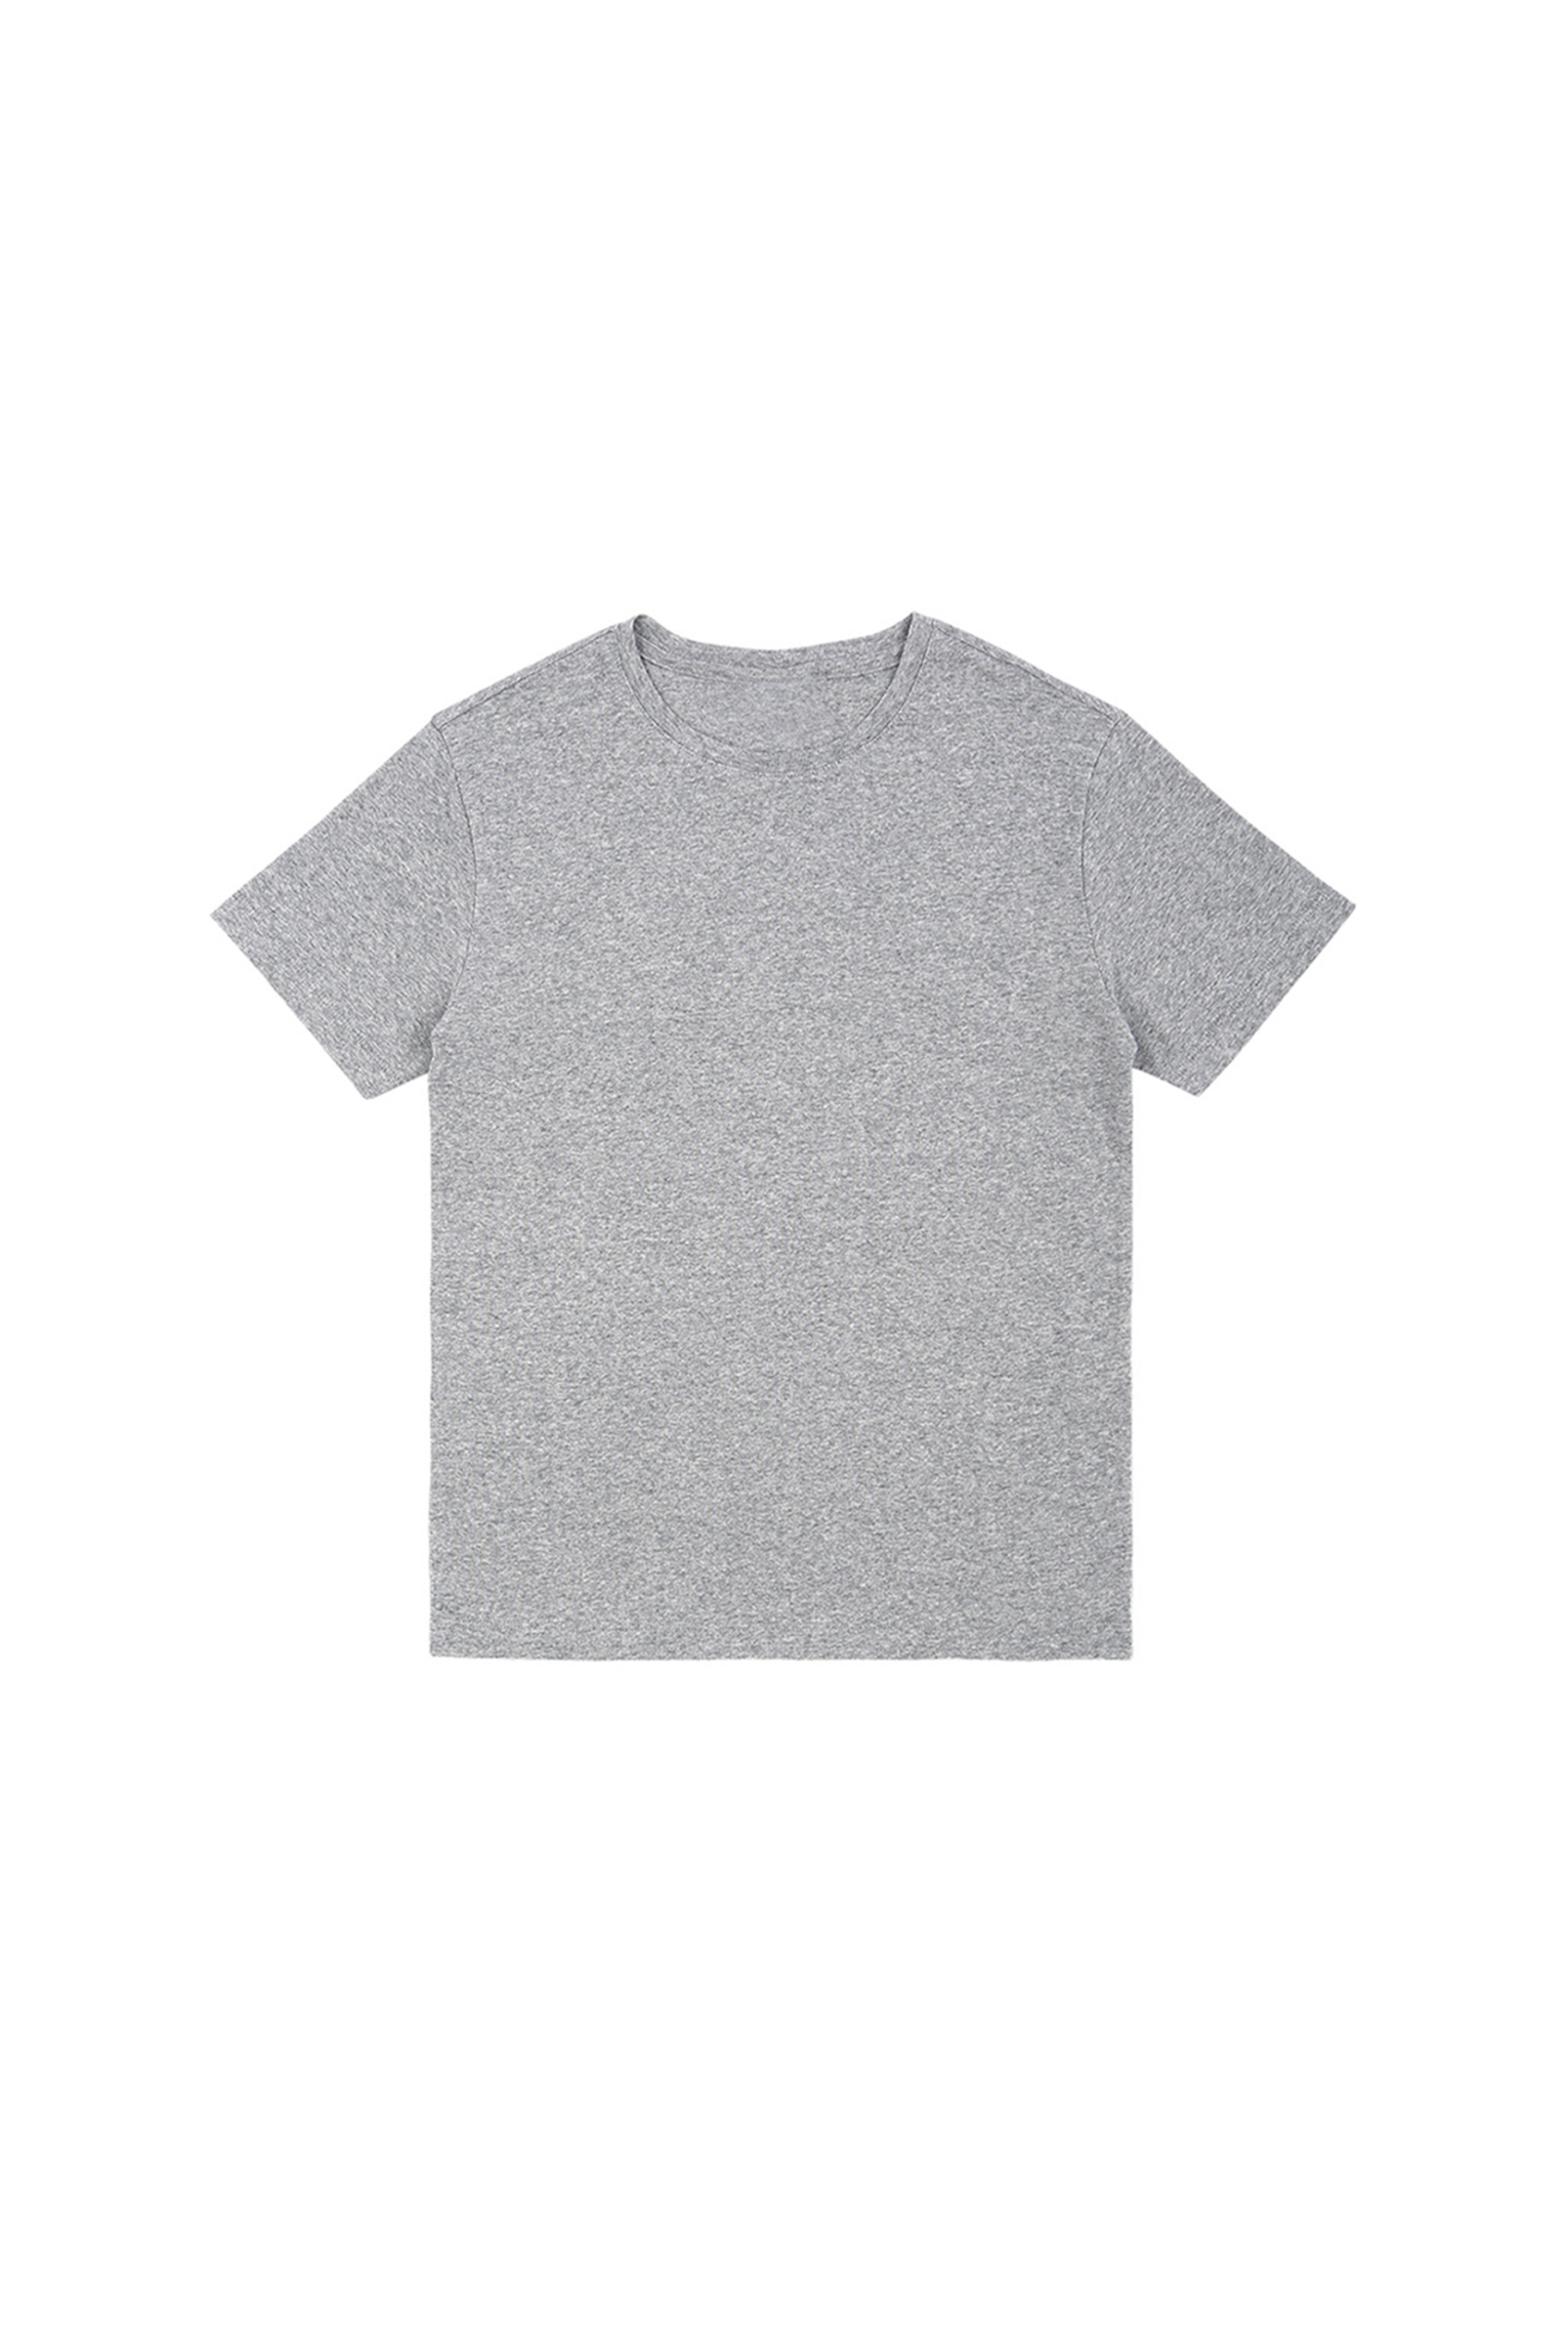 ORE COTTON 002 T-shirt M.Grey